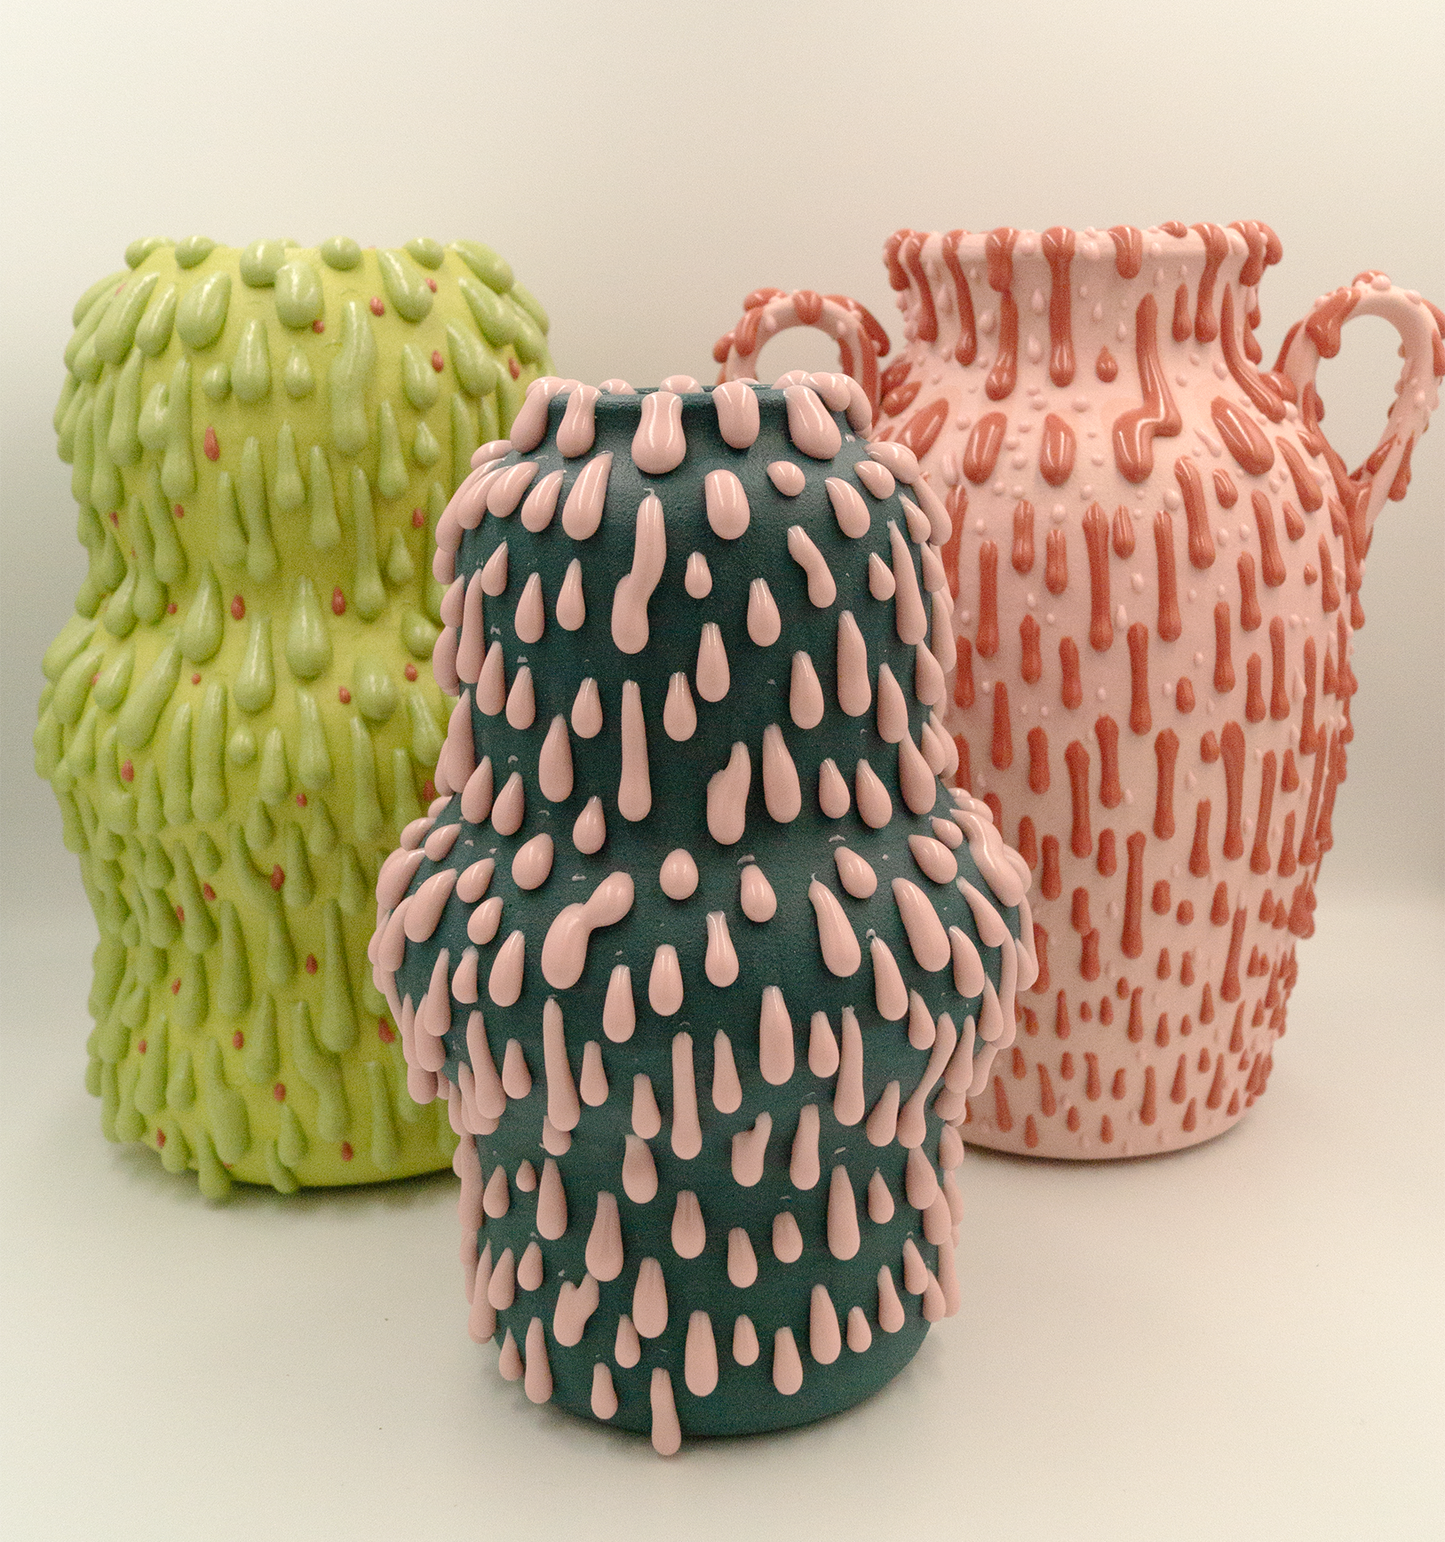 Pink Drop Vase